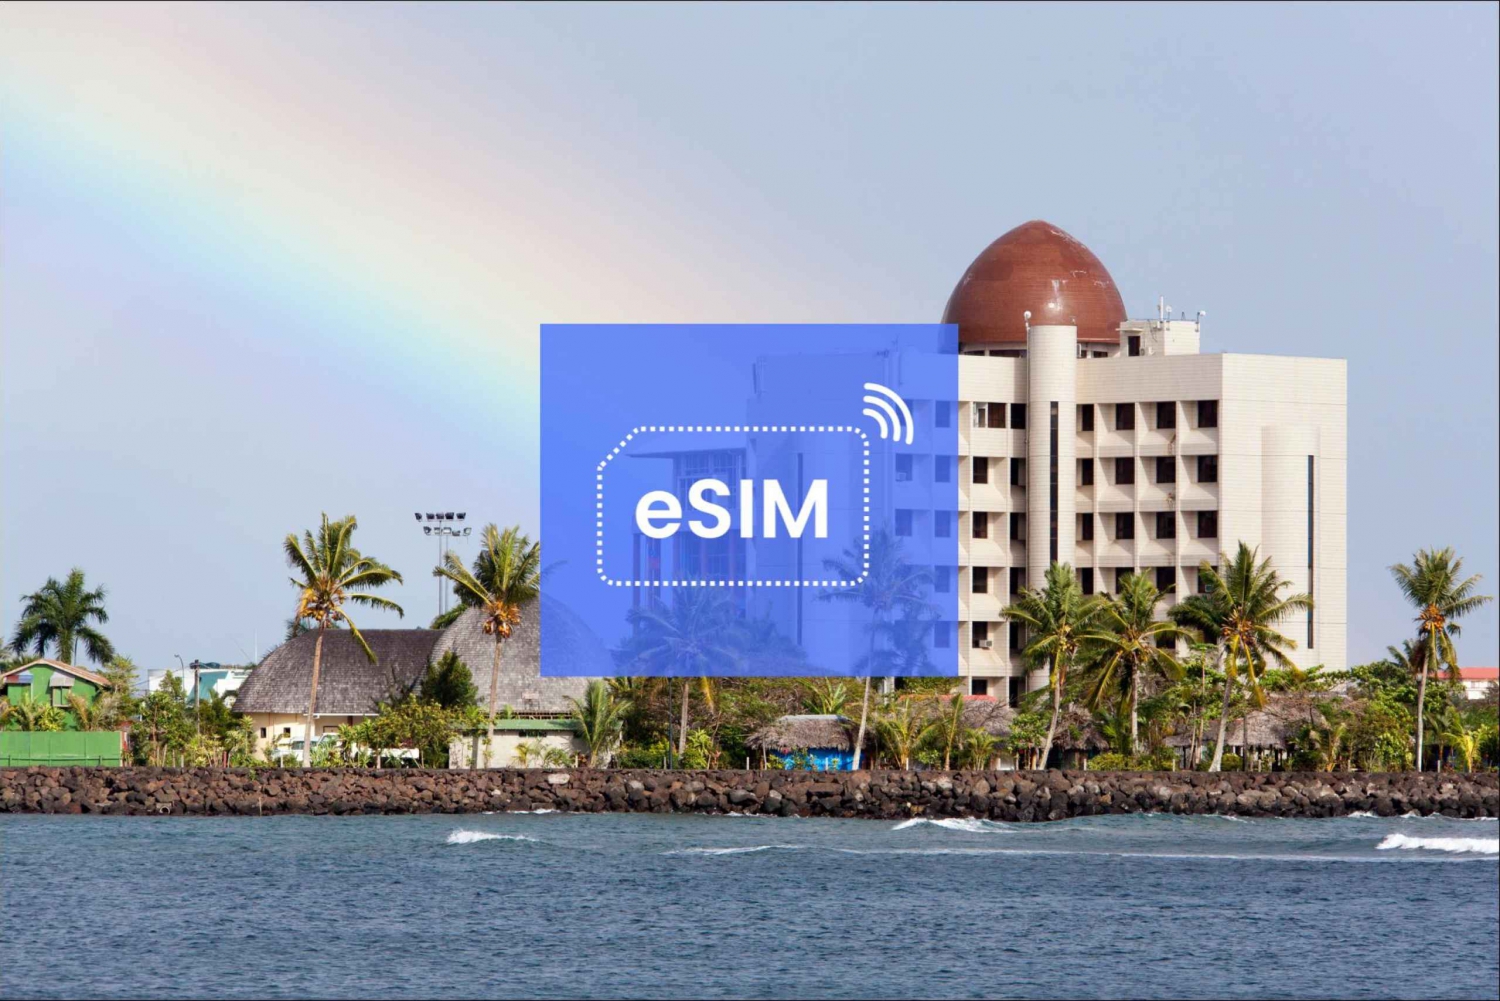 Apia: Samoa eSIM Roaming Mobile Data Plan